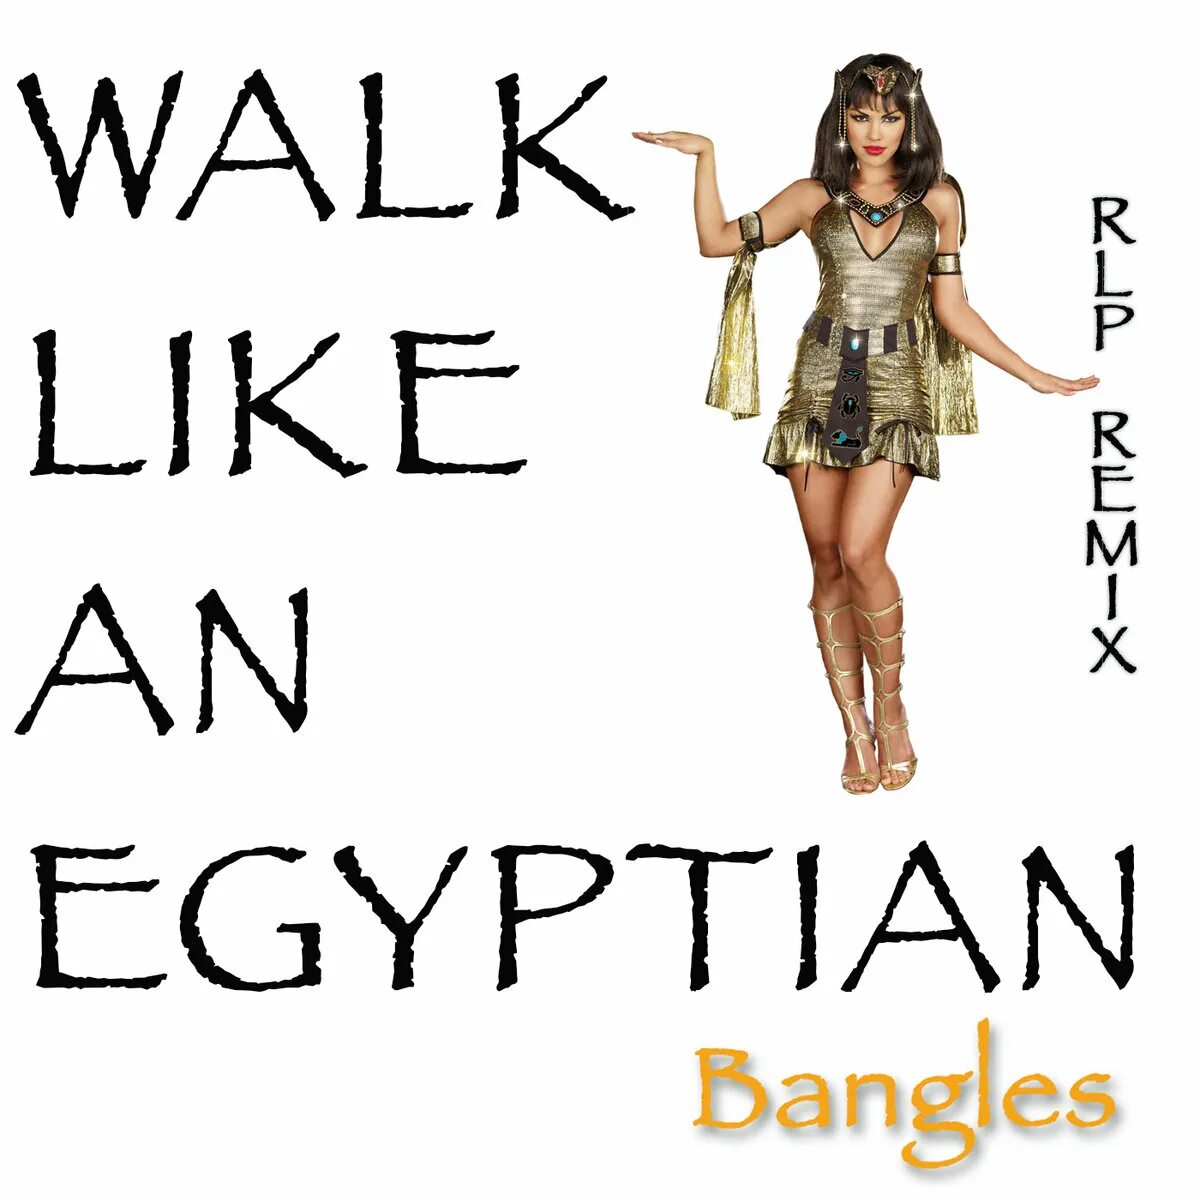 Walk like an Egyptian. Bangles_walk an Egyptian. Walking like an Egyptian. Walk like Egyptian группа. Bangles walk like